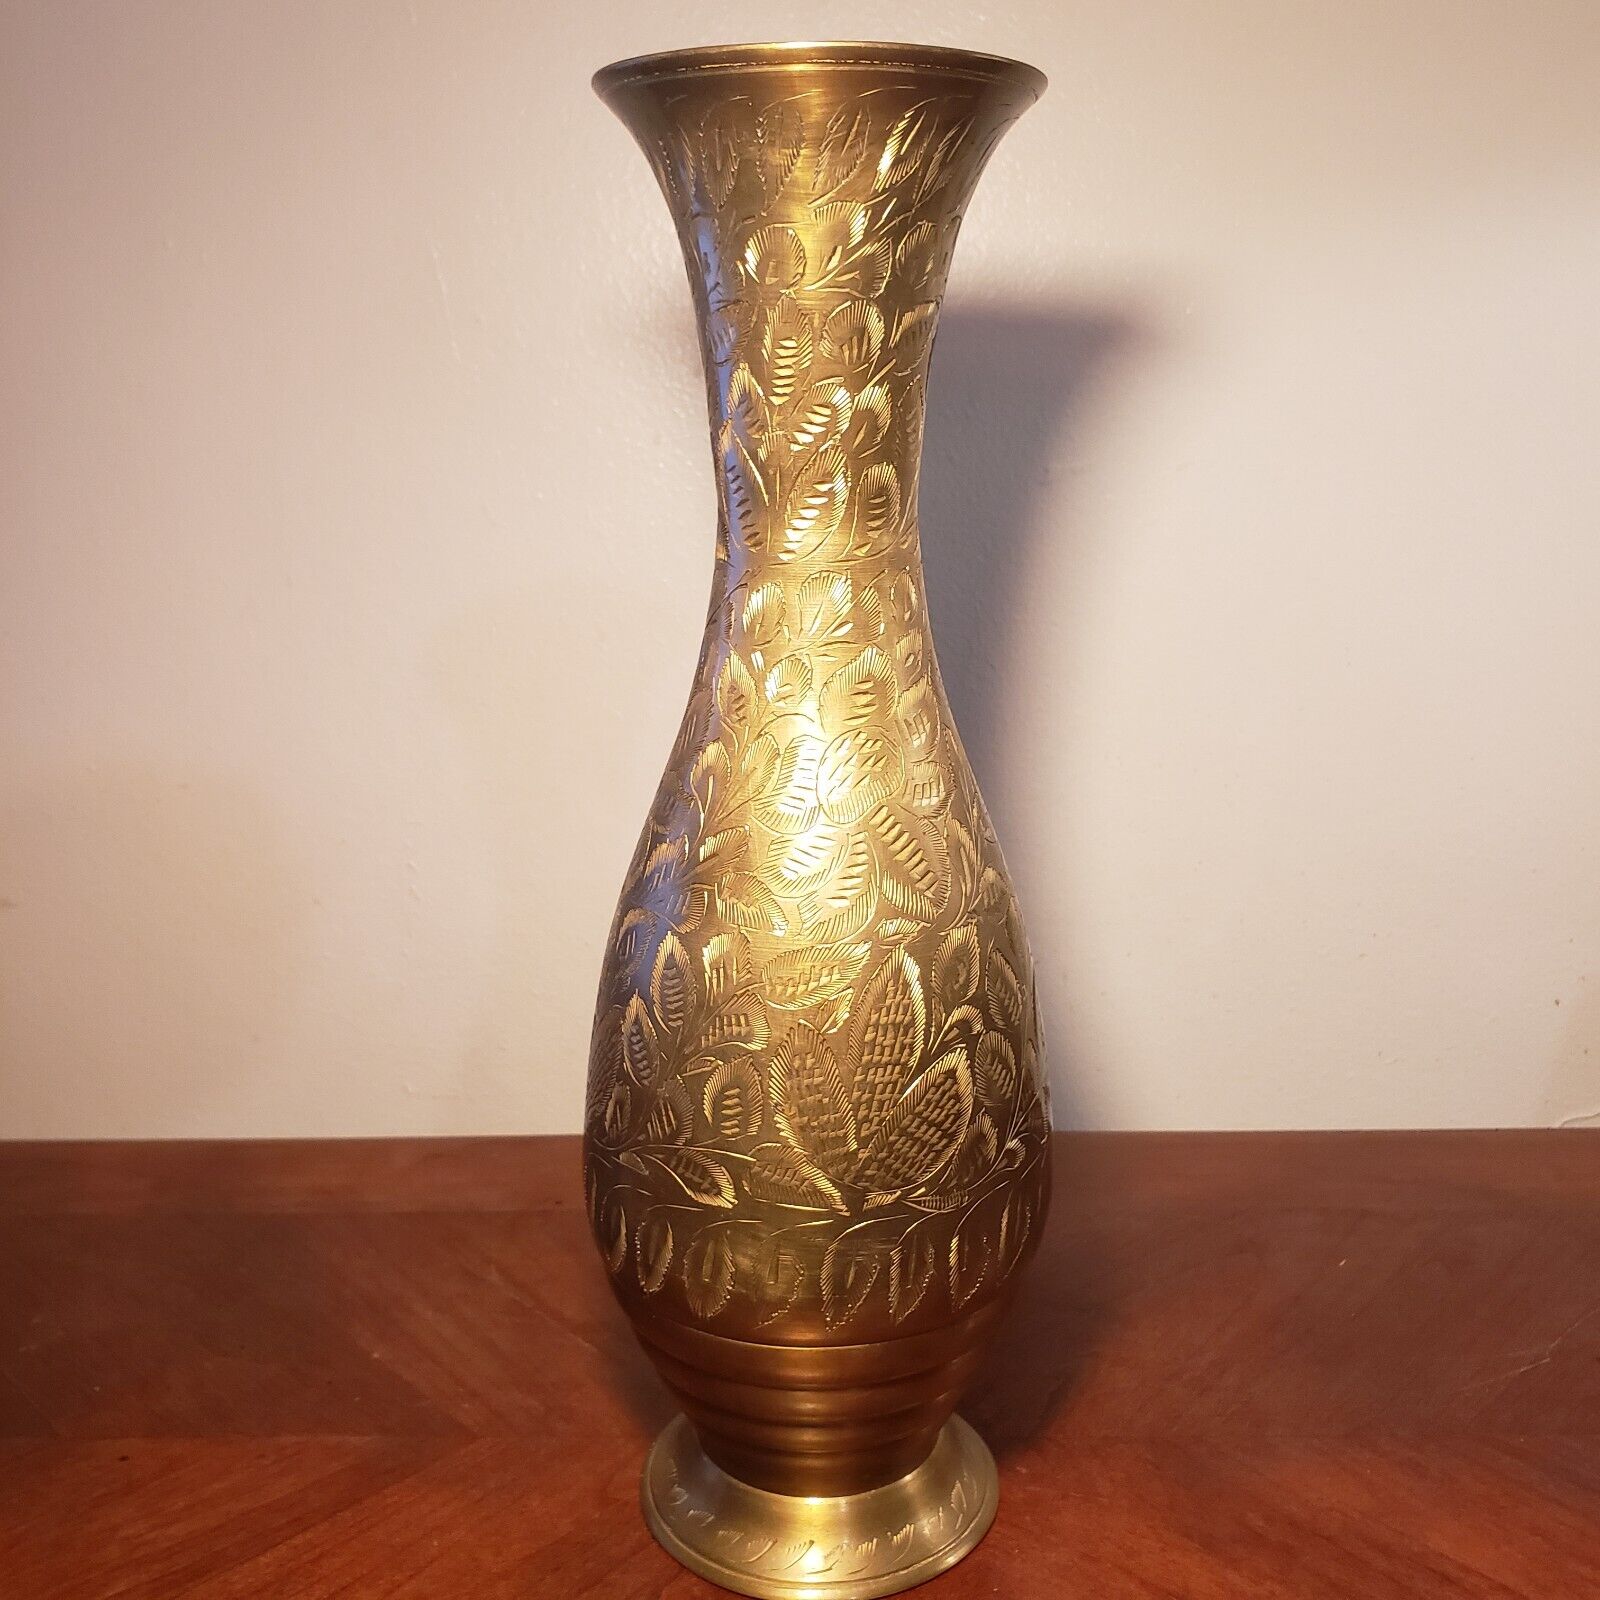 Large Heavy Ornate Vintage Indian Solid Brass Carved Vase With Floral Pattern